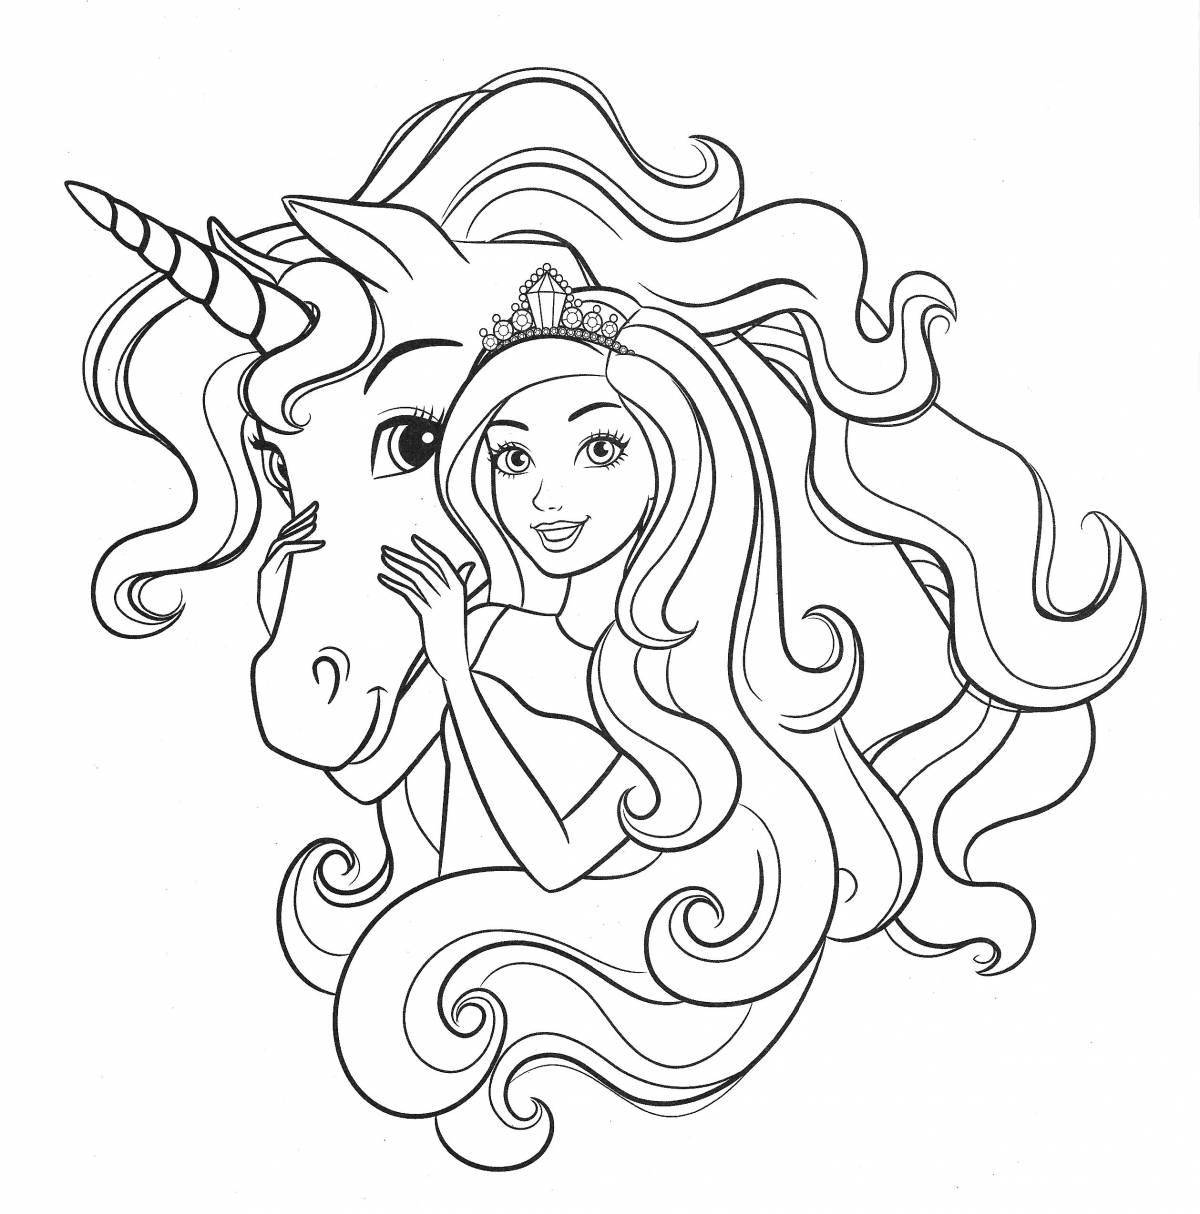 Fancy coloring mermaid unicorn